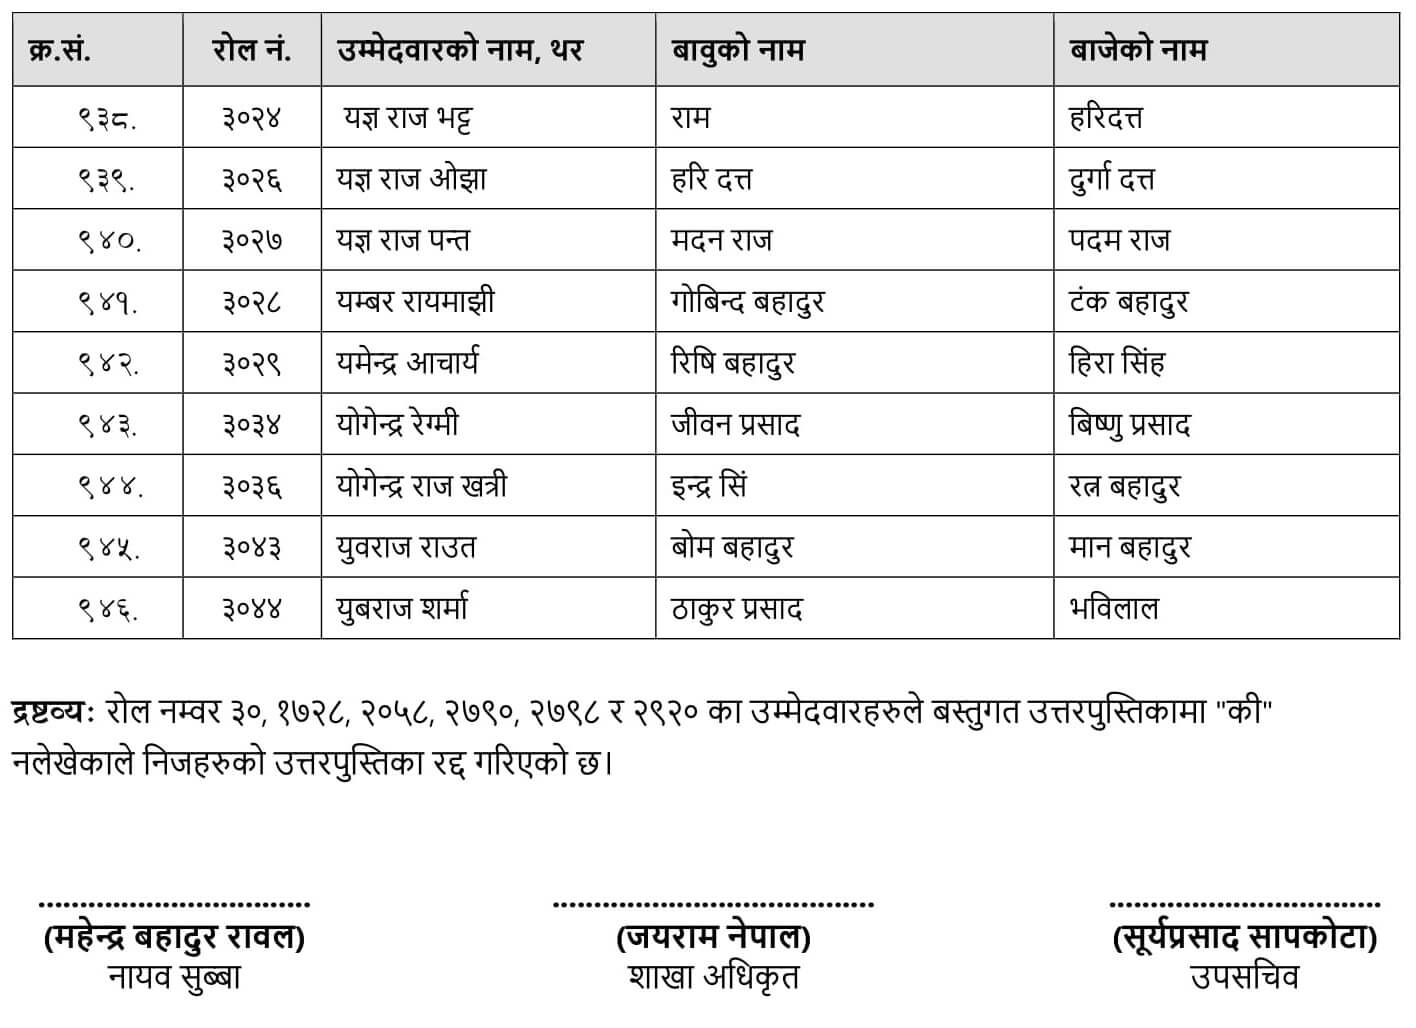 Nepal Rastra Bank Assistant Director Exam Result